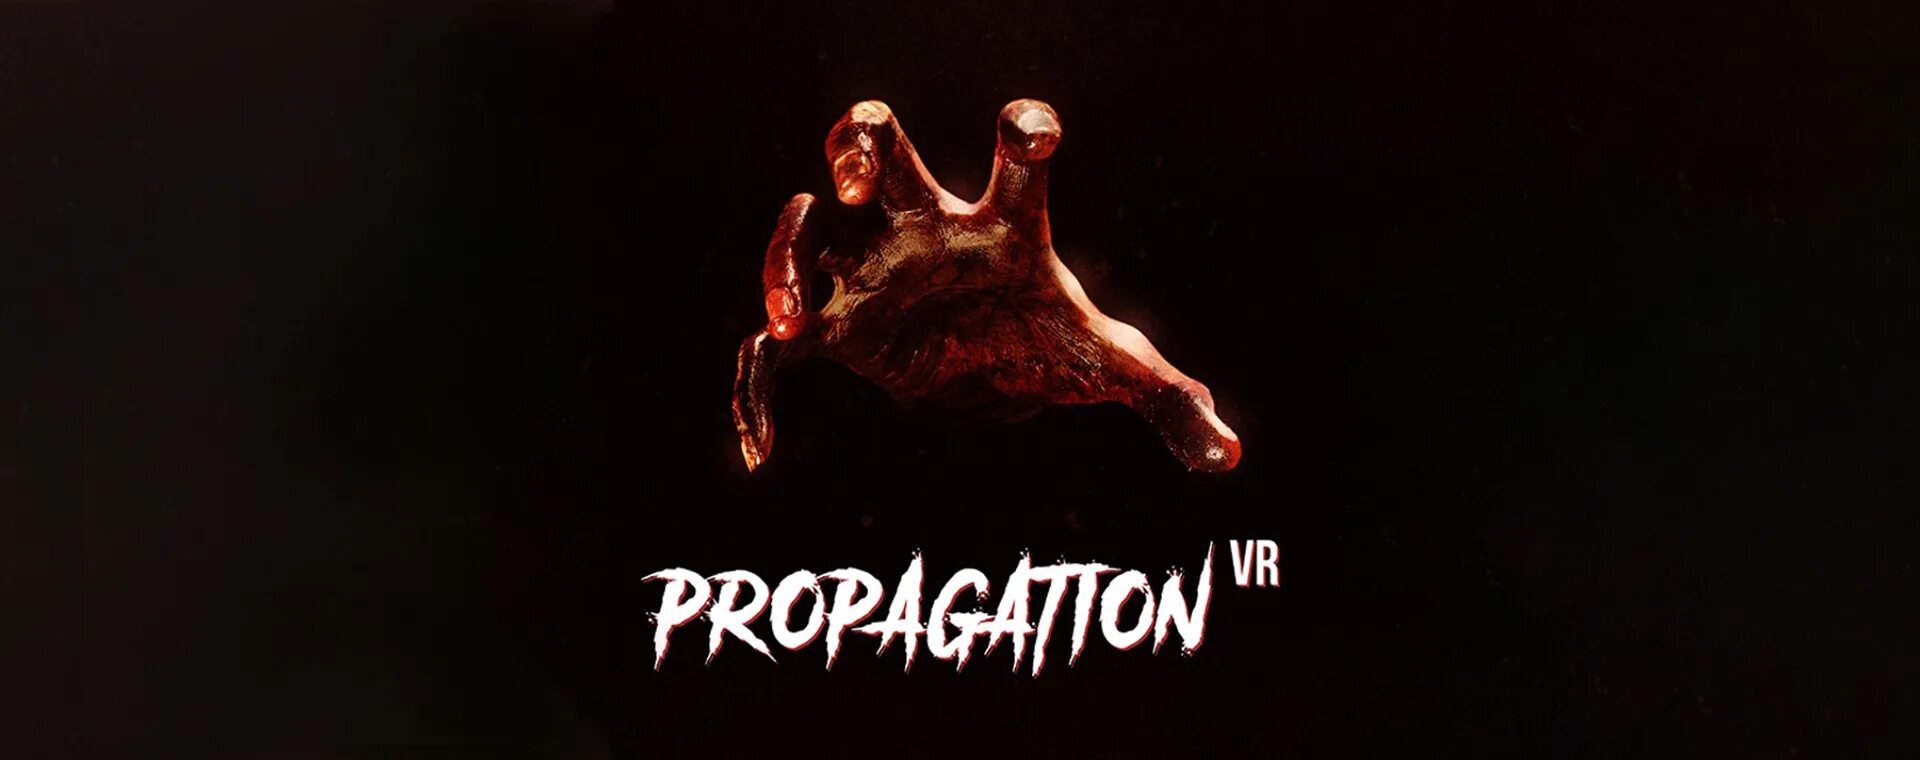 Propagation vr. Игра “propagation VR логотип.